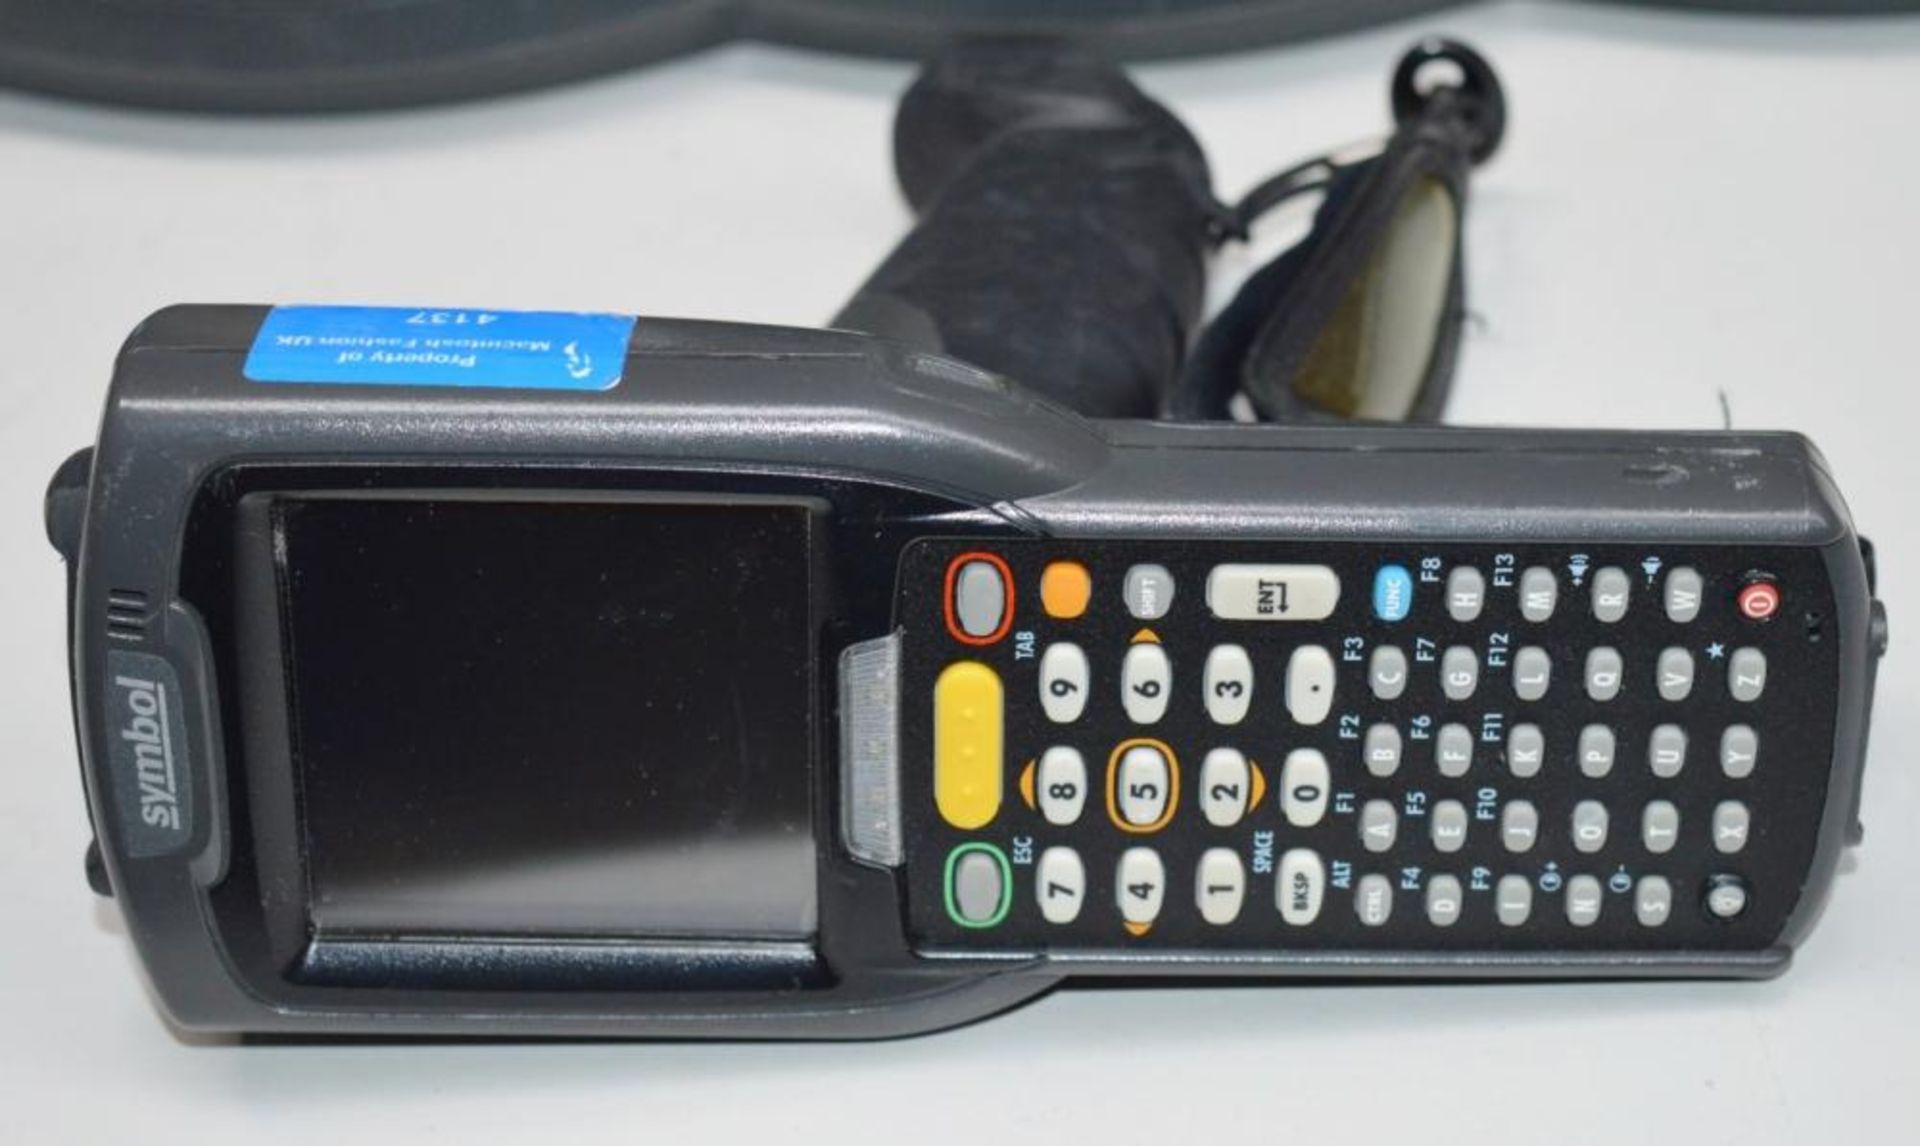 4 x Motorola Symbol MC3090 Handheld Barcode Scanners - Mobile Computer PDA - Includes Charging Dock, - Image 6 of 7